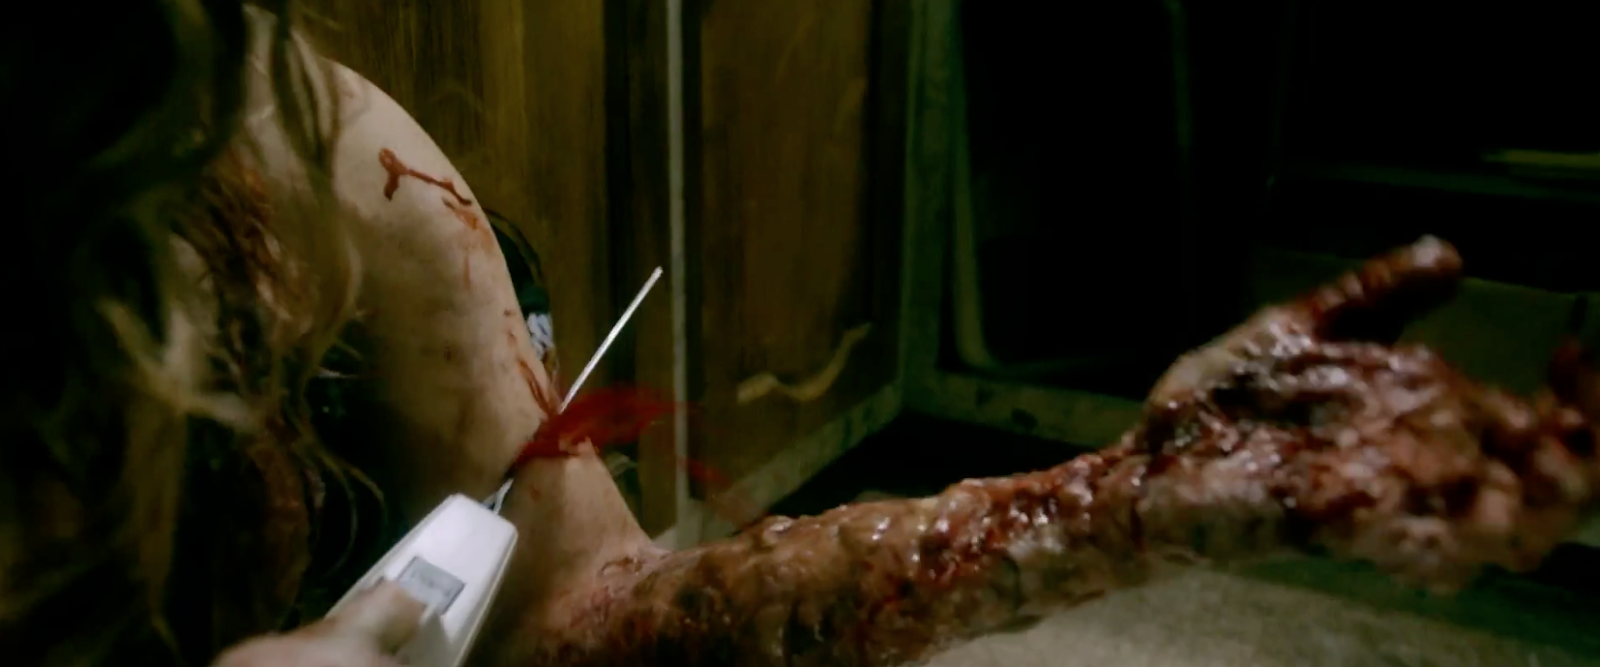 evil-dead-remake-2013-arm-cuttting-scene.png